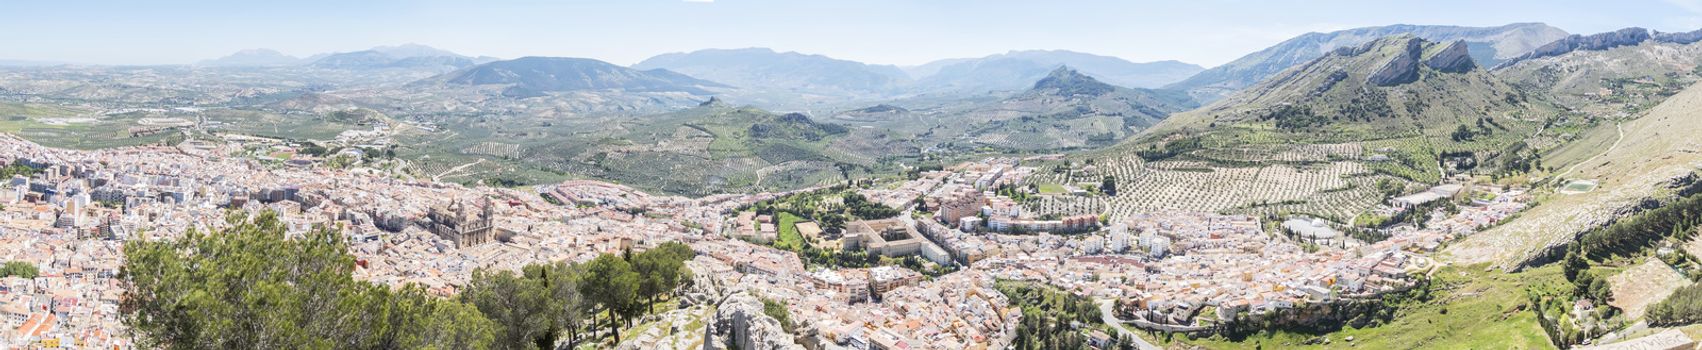 Jaen city panoramic view from Santa Catalina Cross view point, Spain